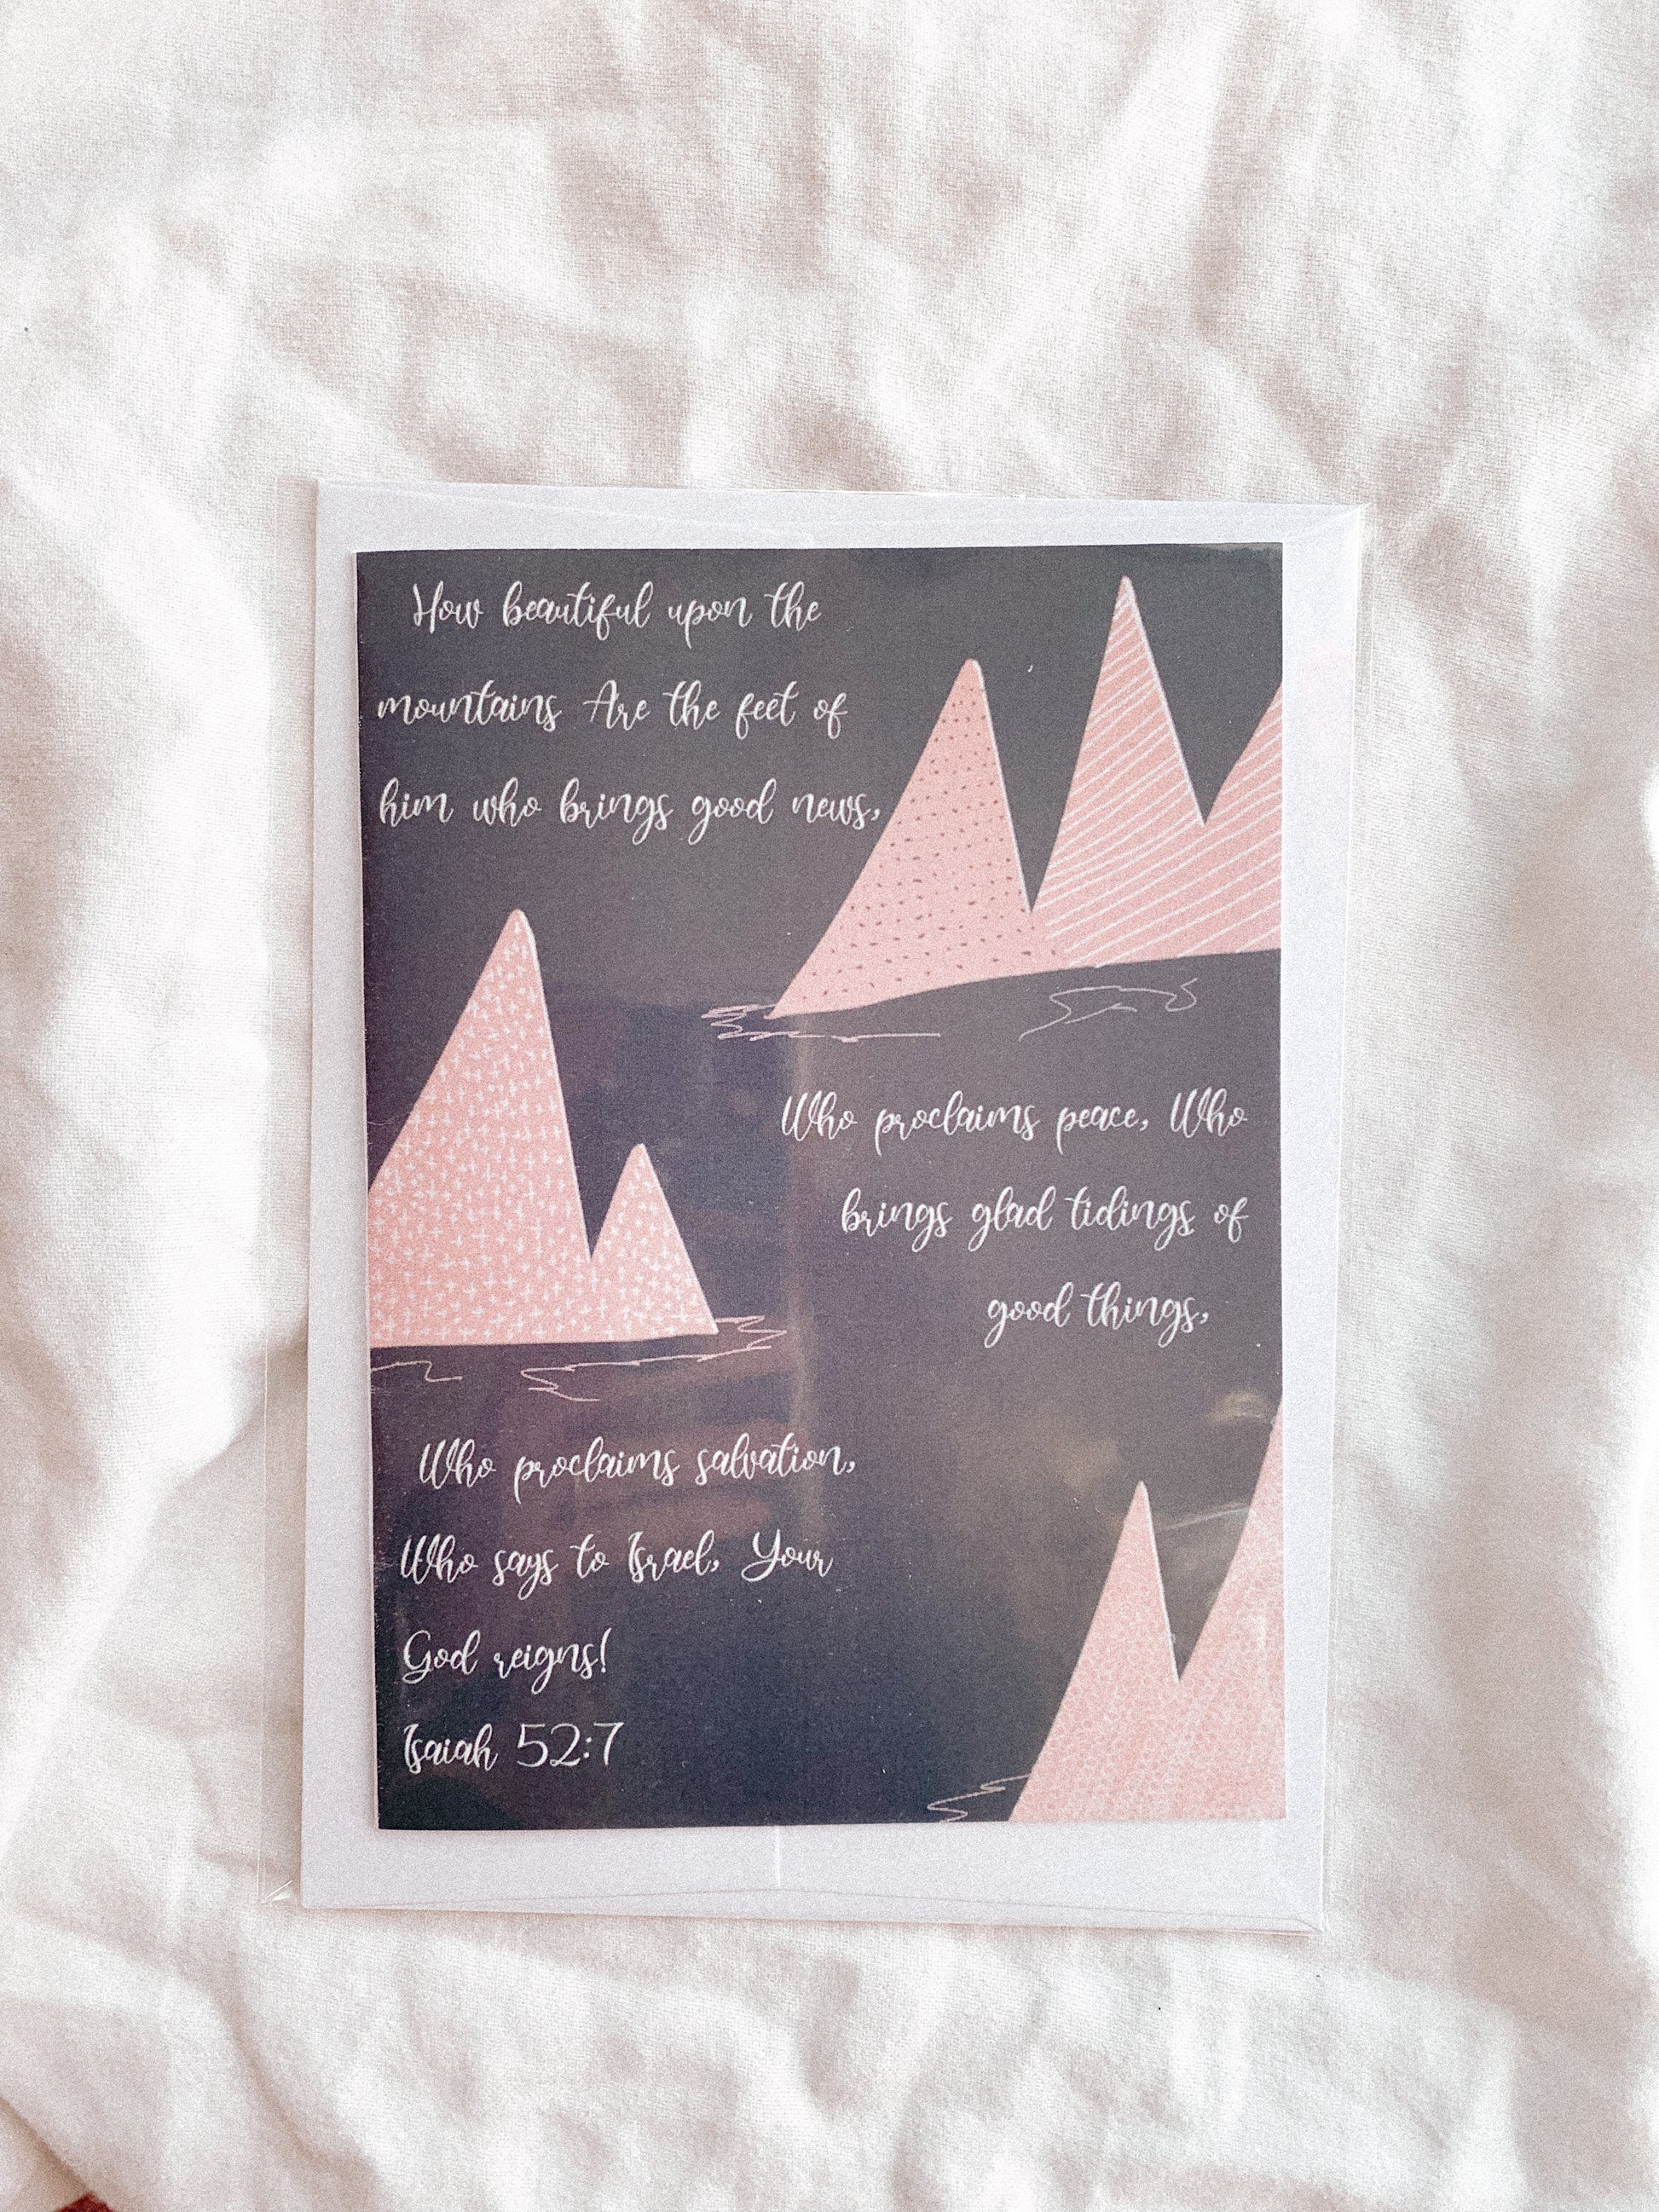 Isaiah 52:7 Greeting Card - Abby’s Threads